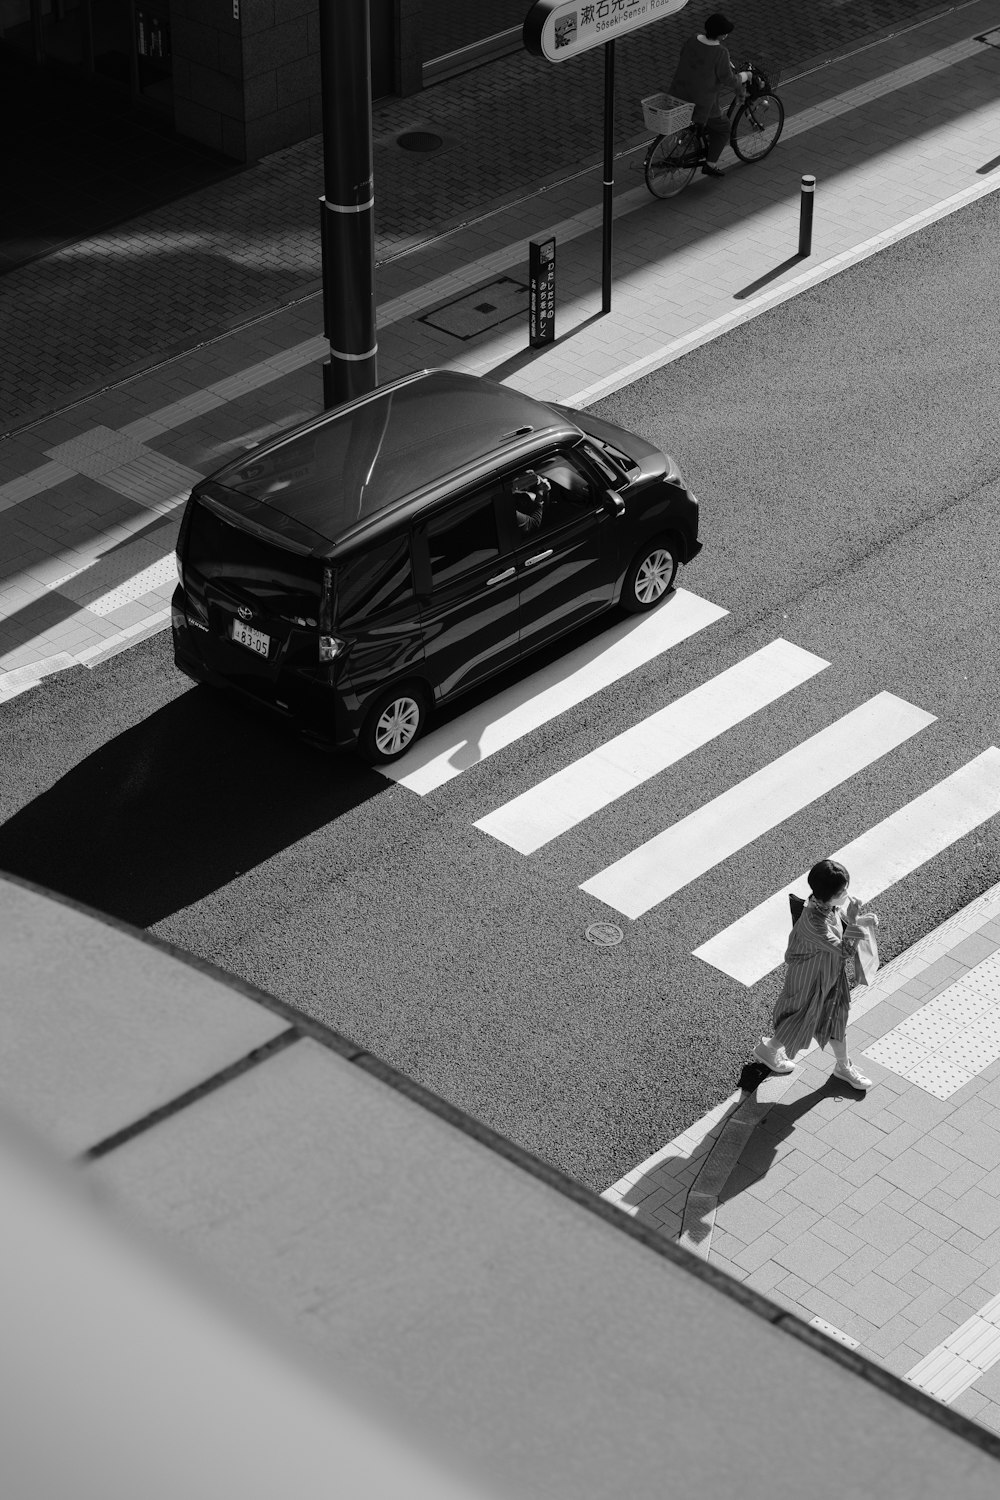 a person walking across a street next to a van